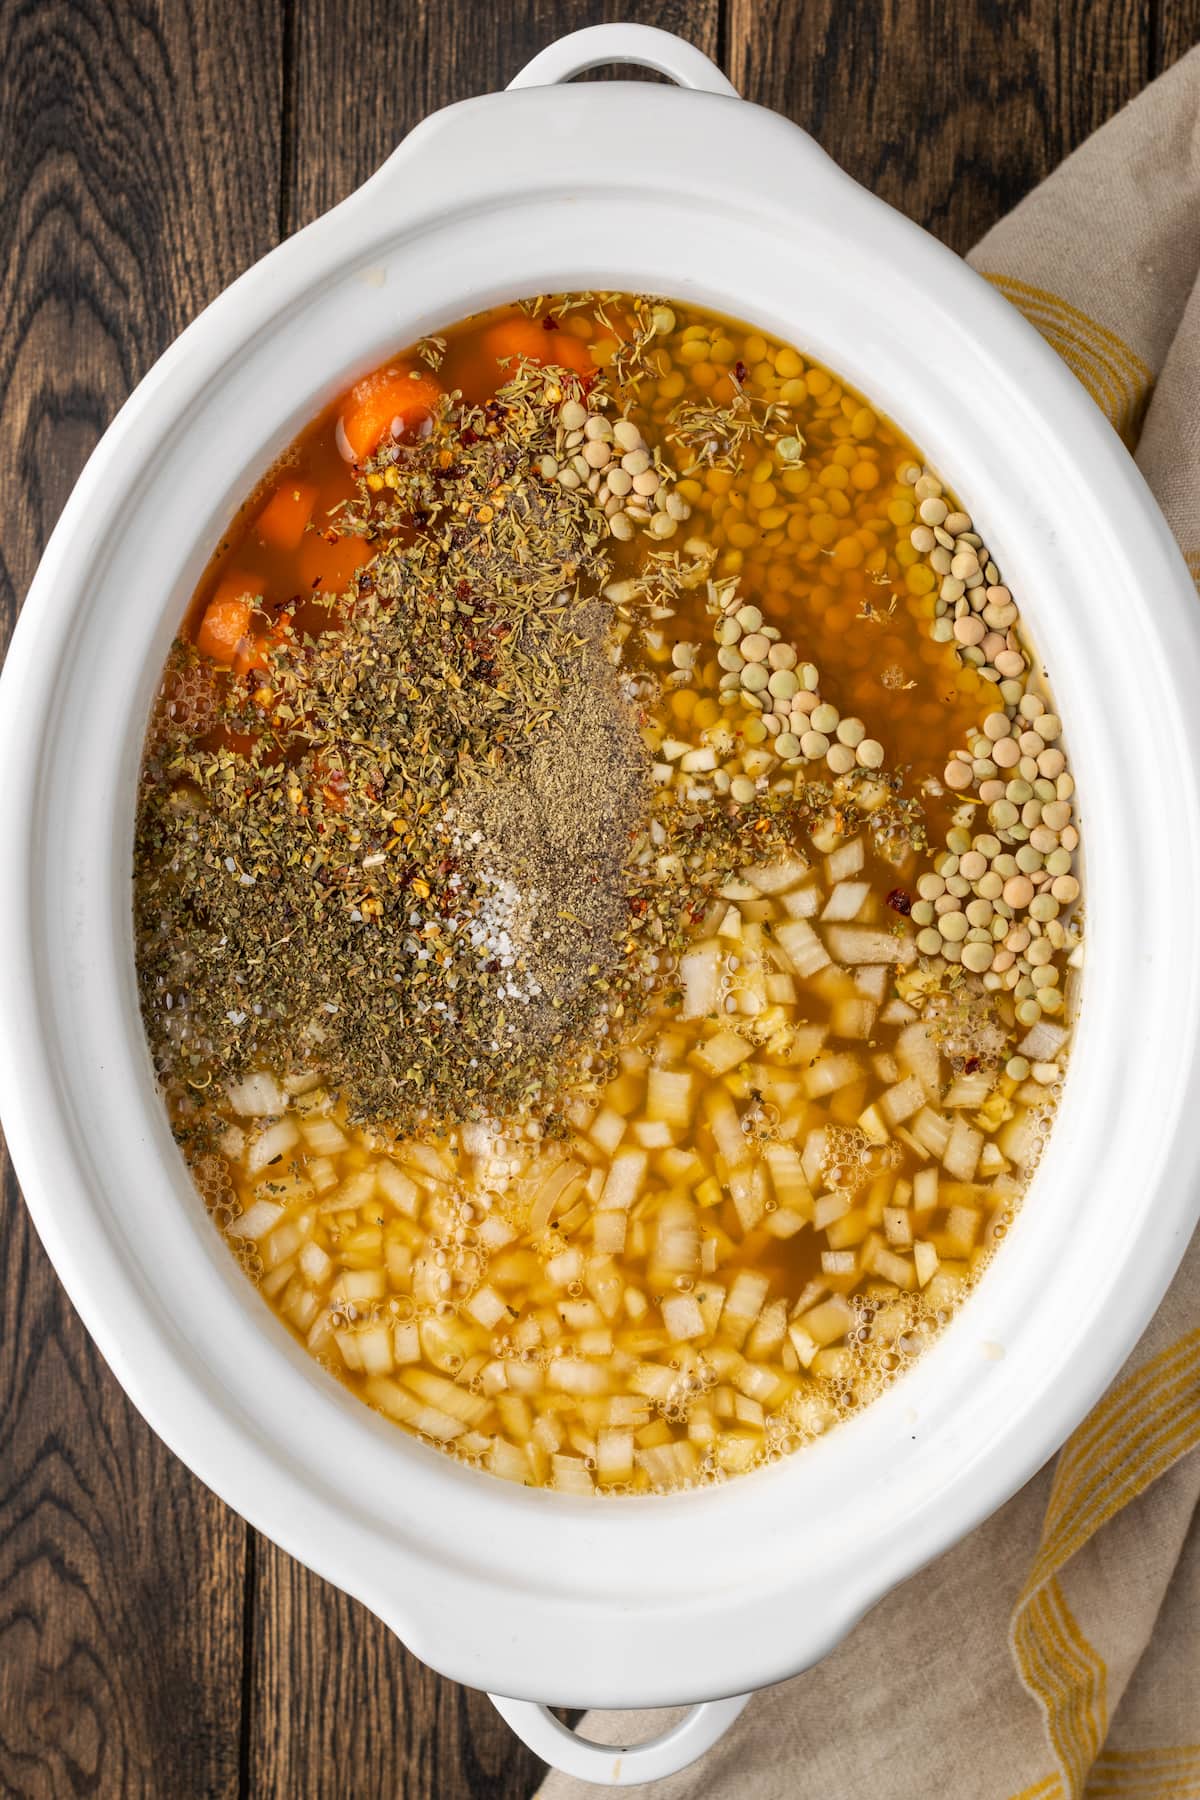 Ingredients for lentil soup assembled in the bowl of a crock pot.